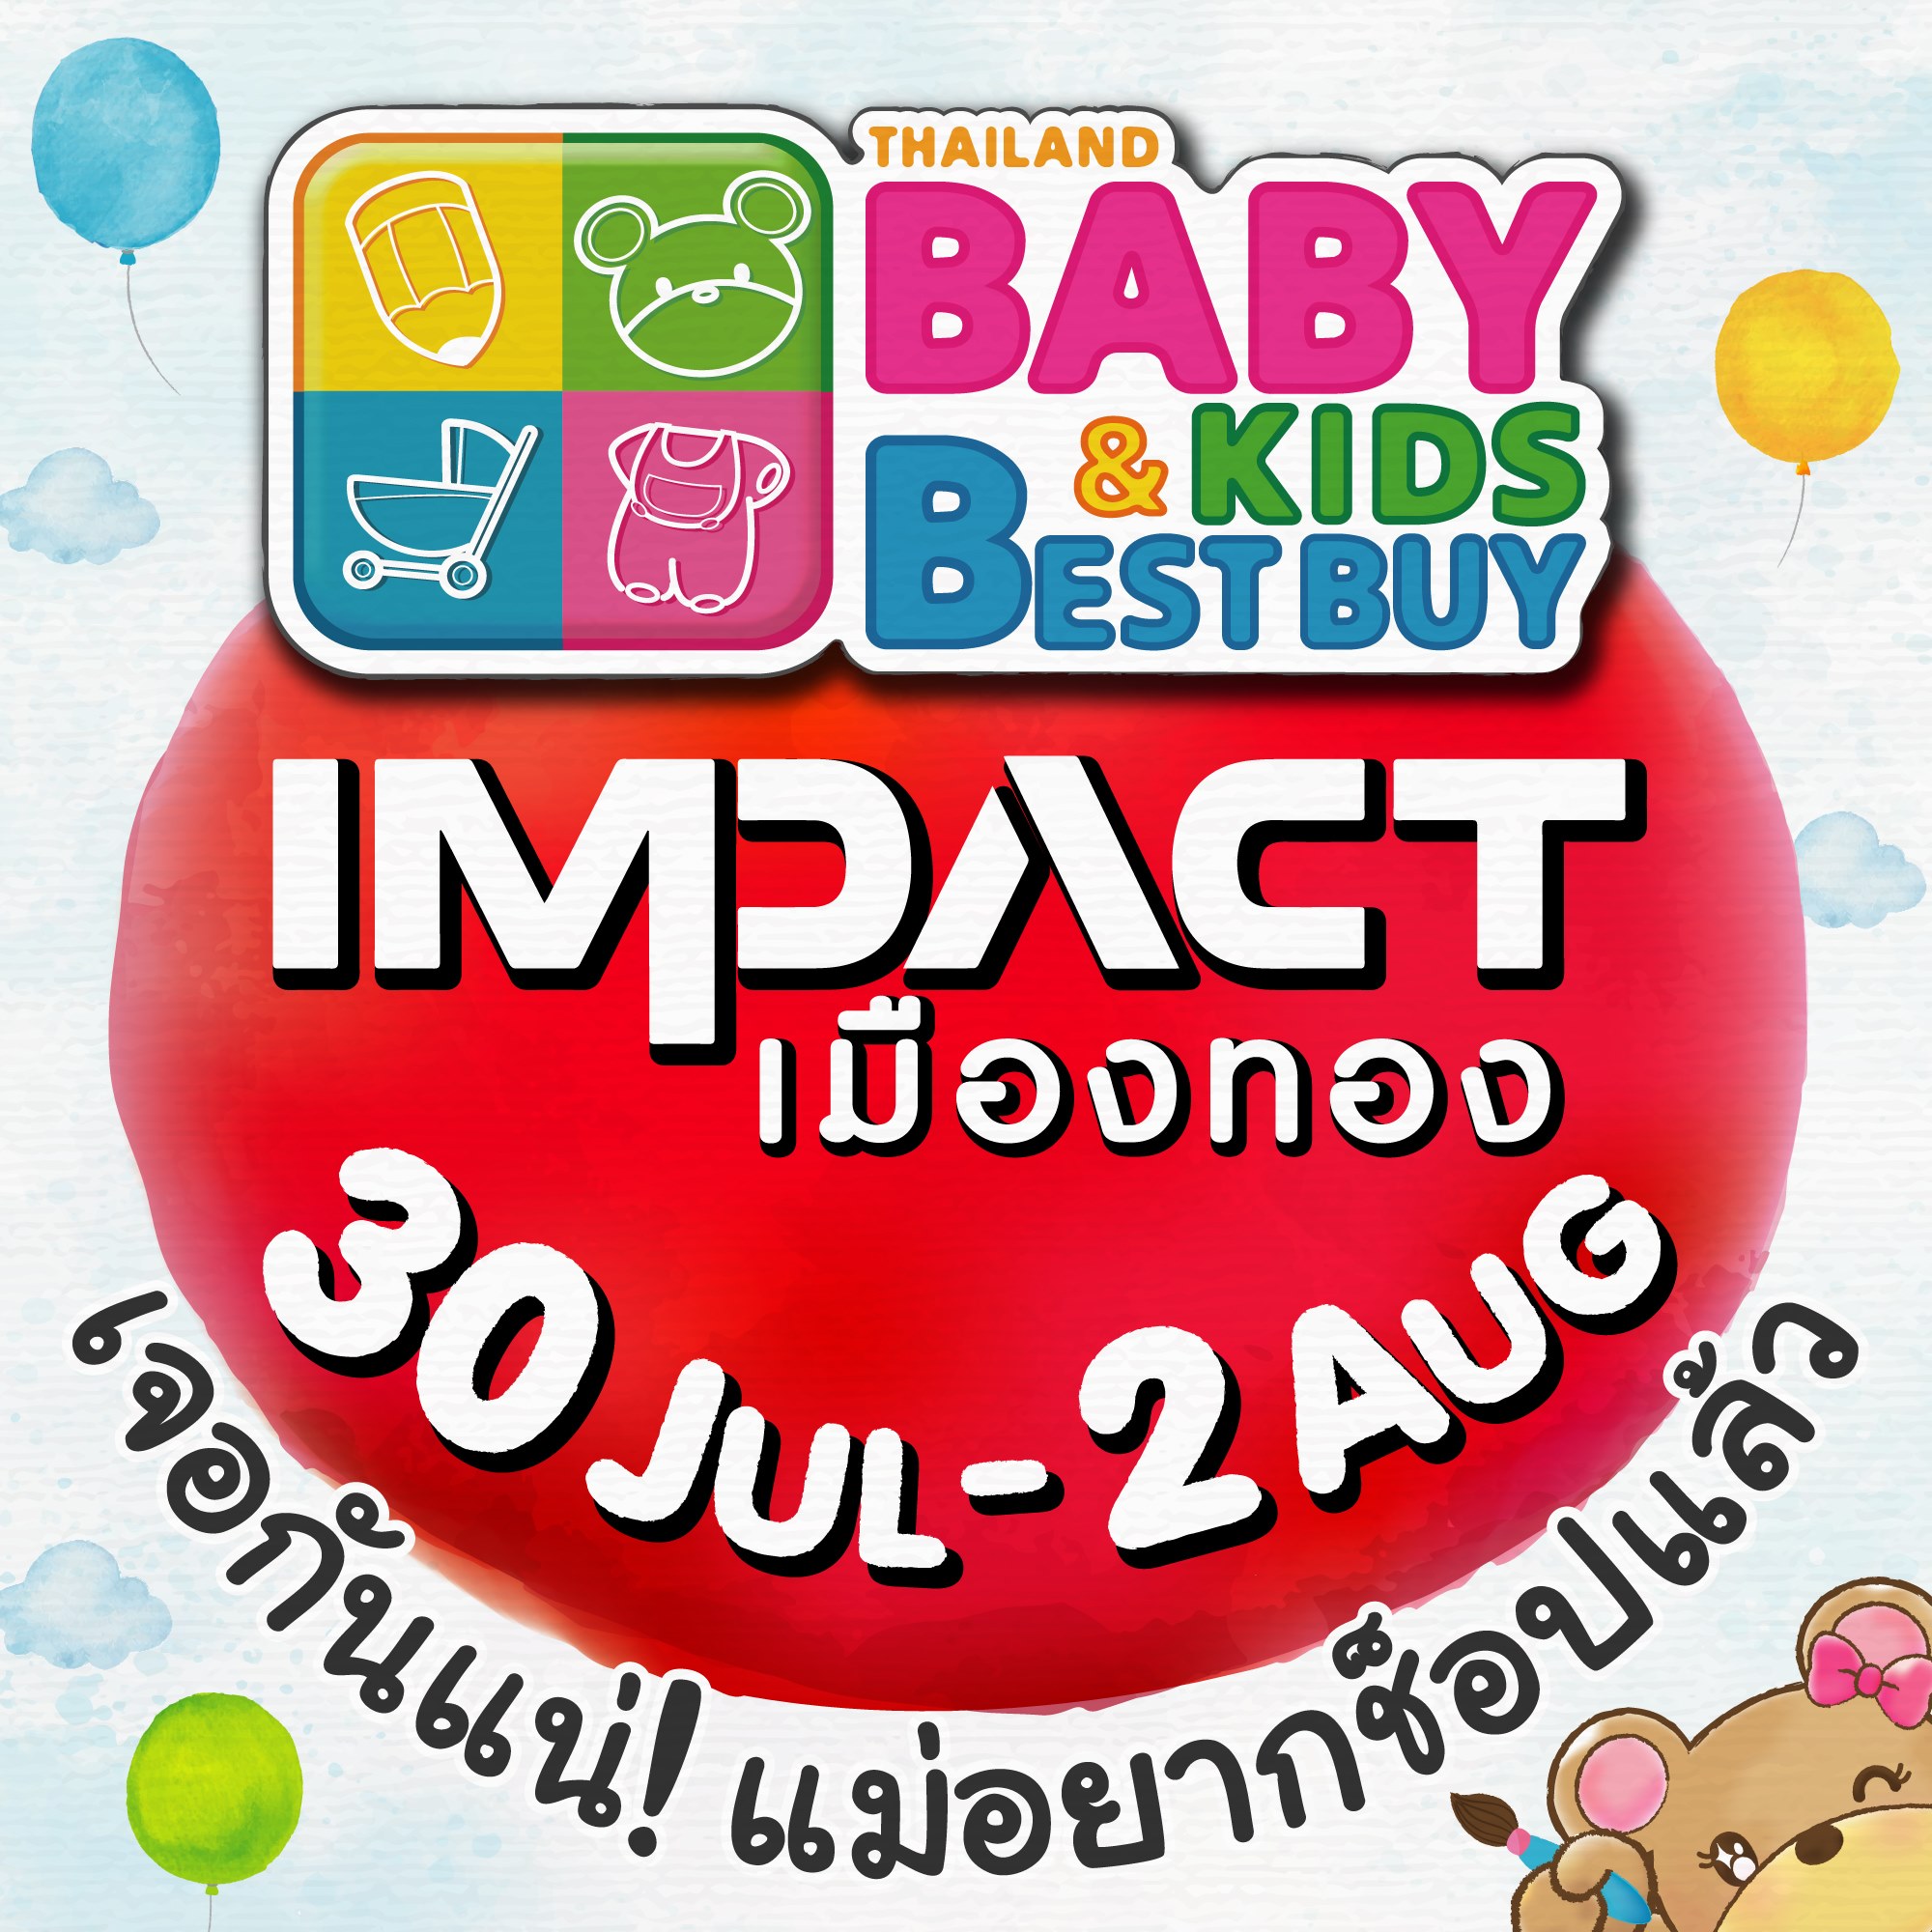 Thailand Baby & Kids Best Buy ครั้งที่ 37